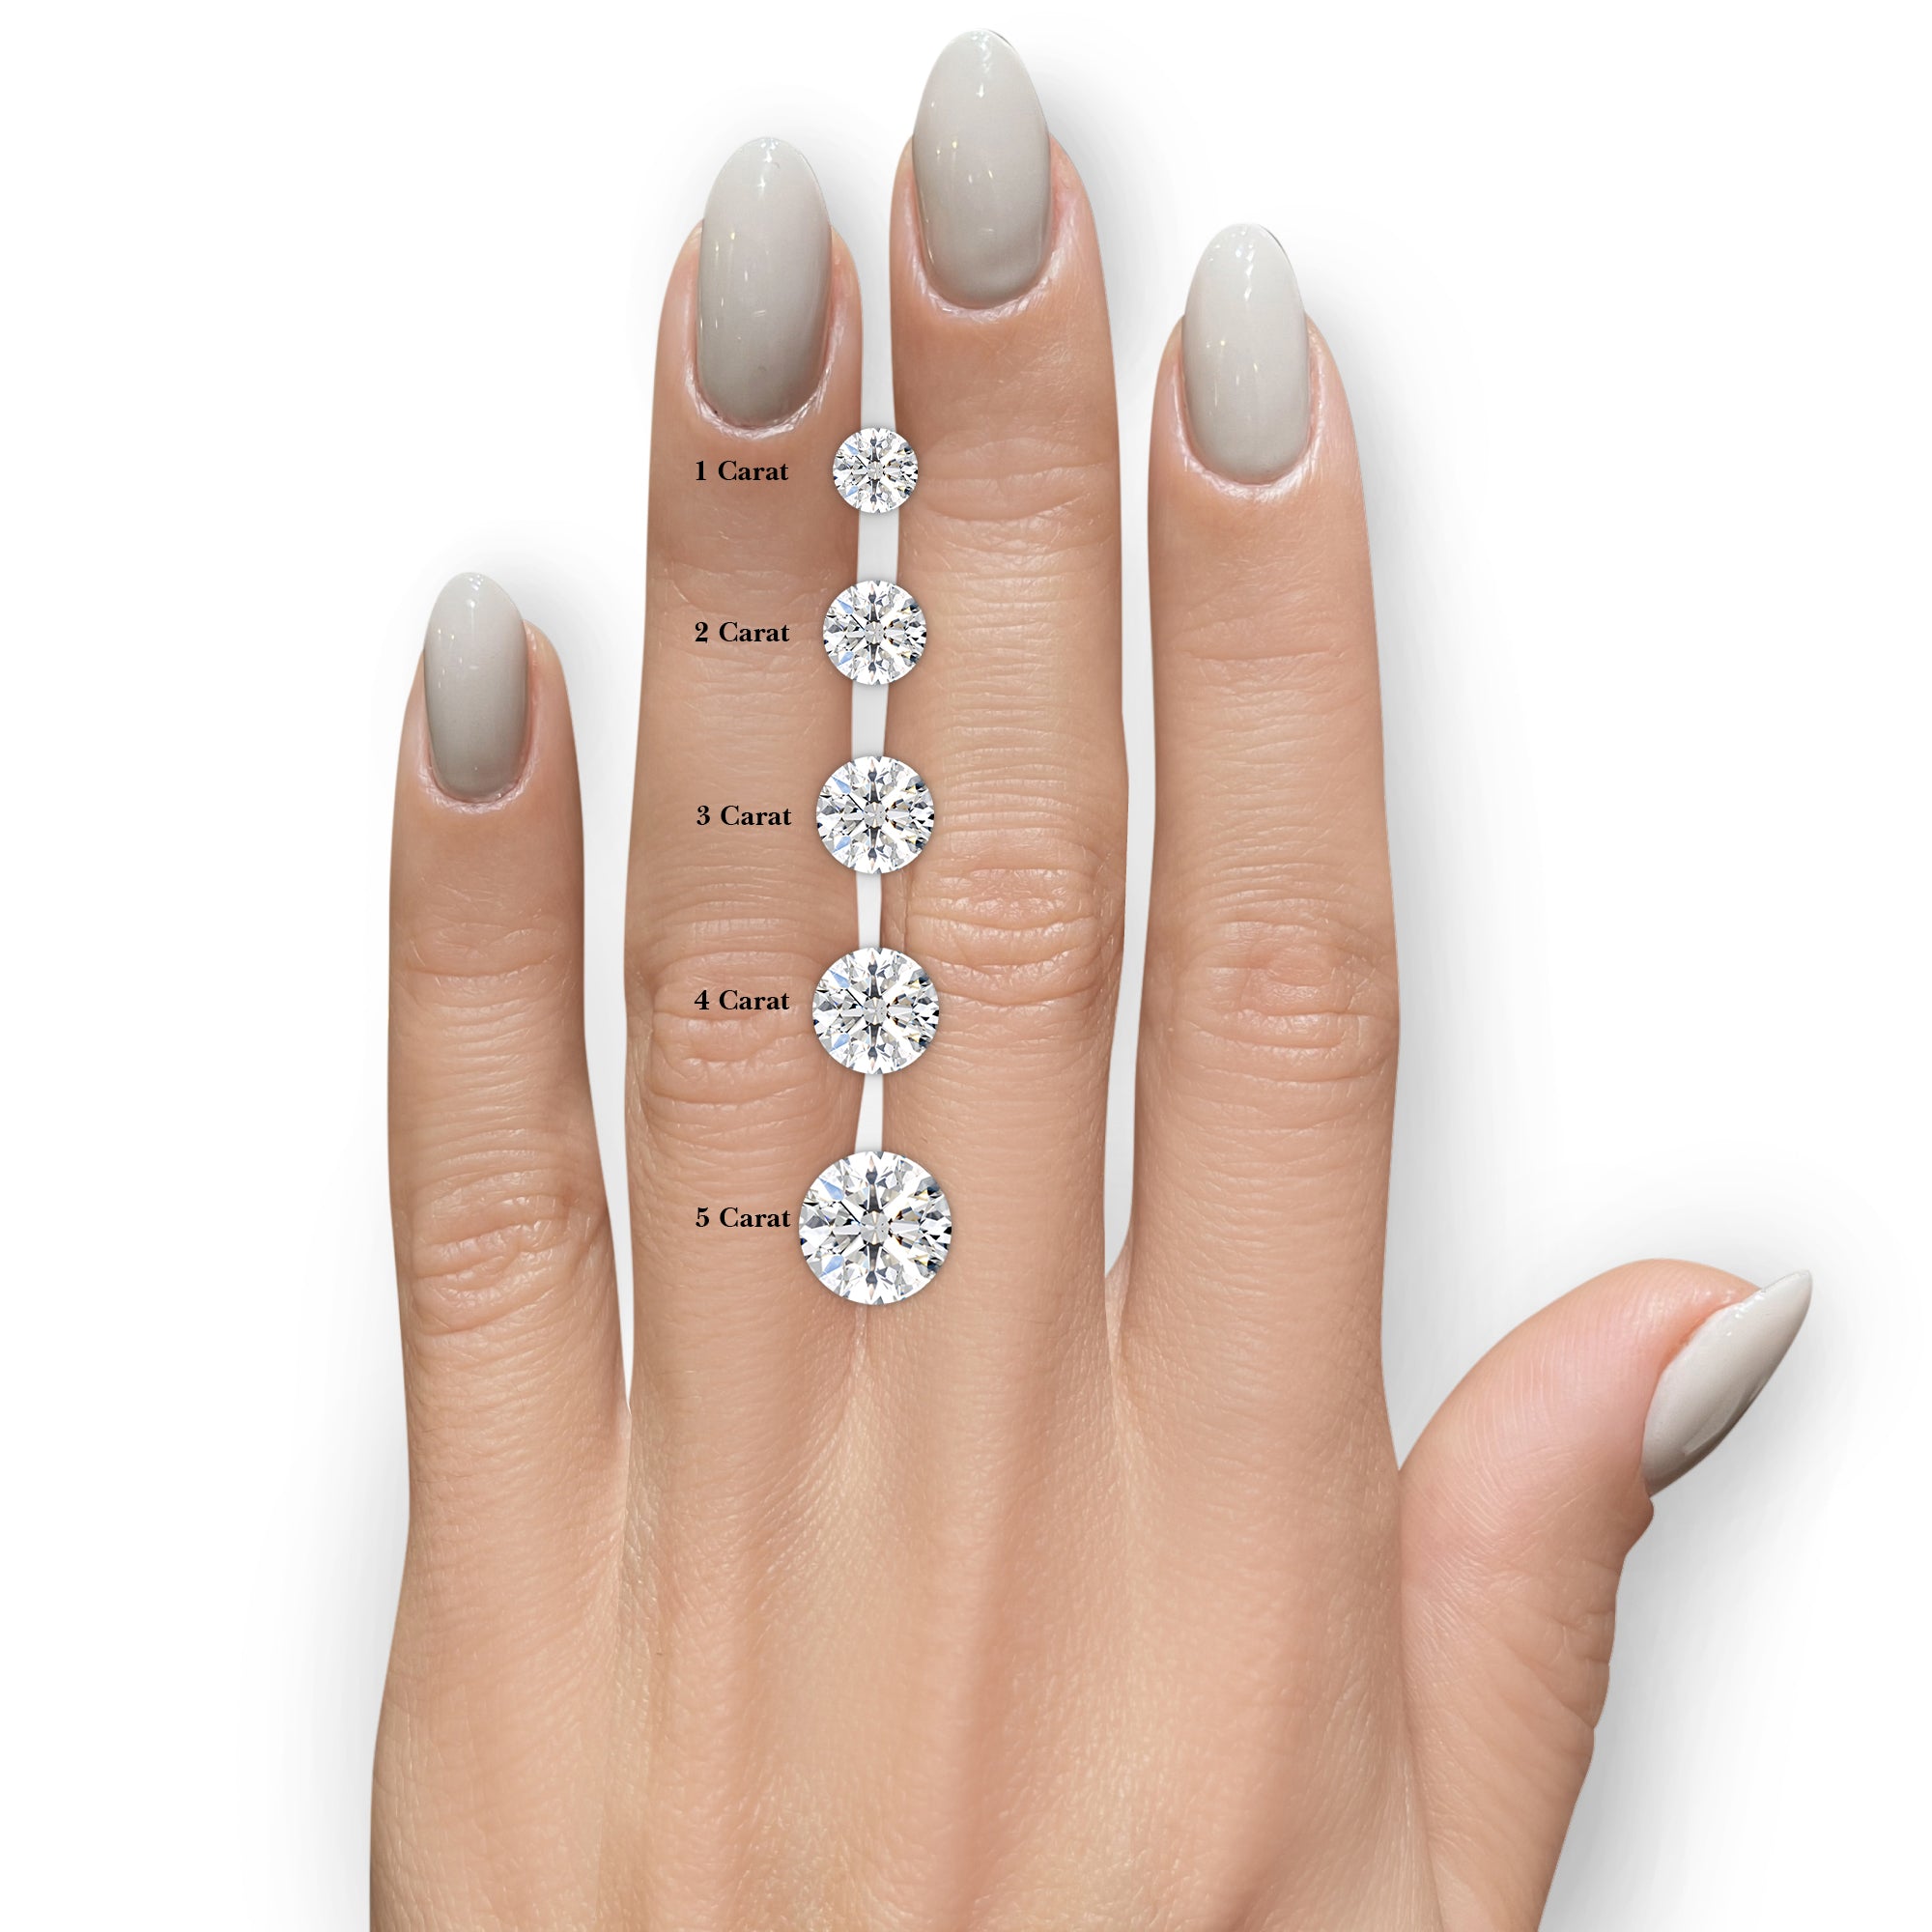 Nola Diamond Engagement Ring -14K White Gold